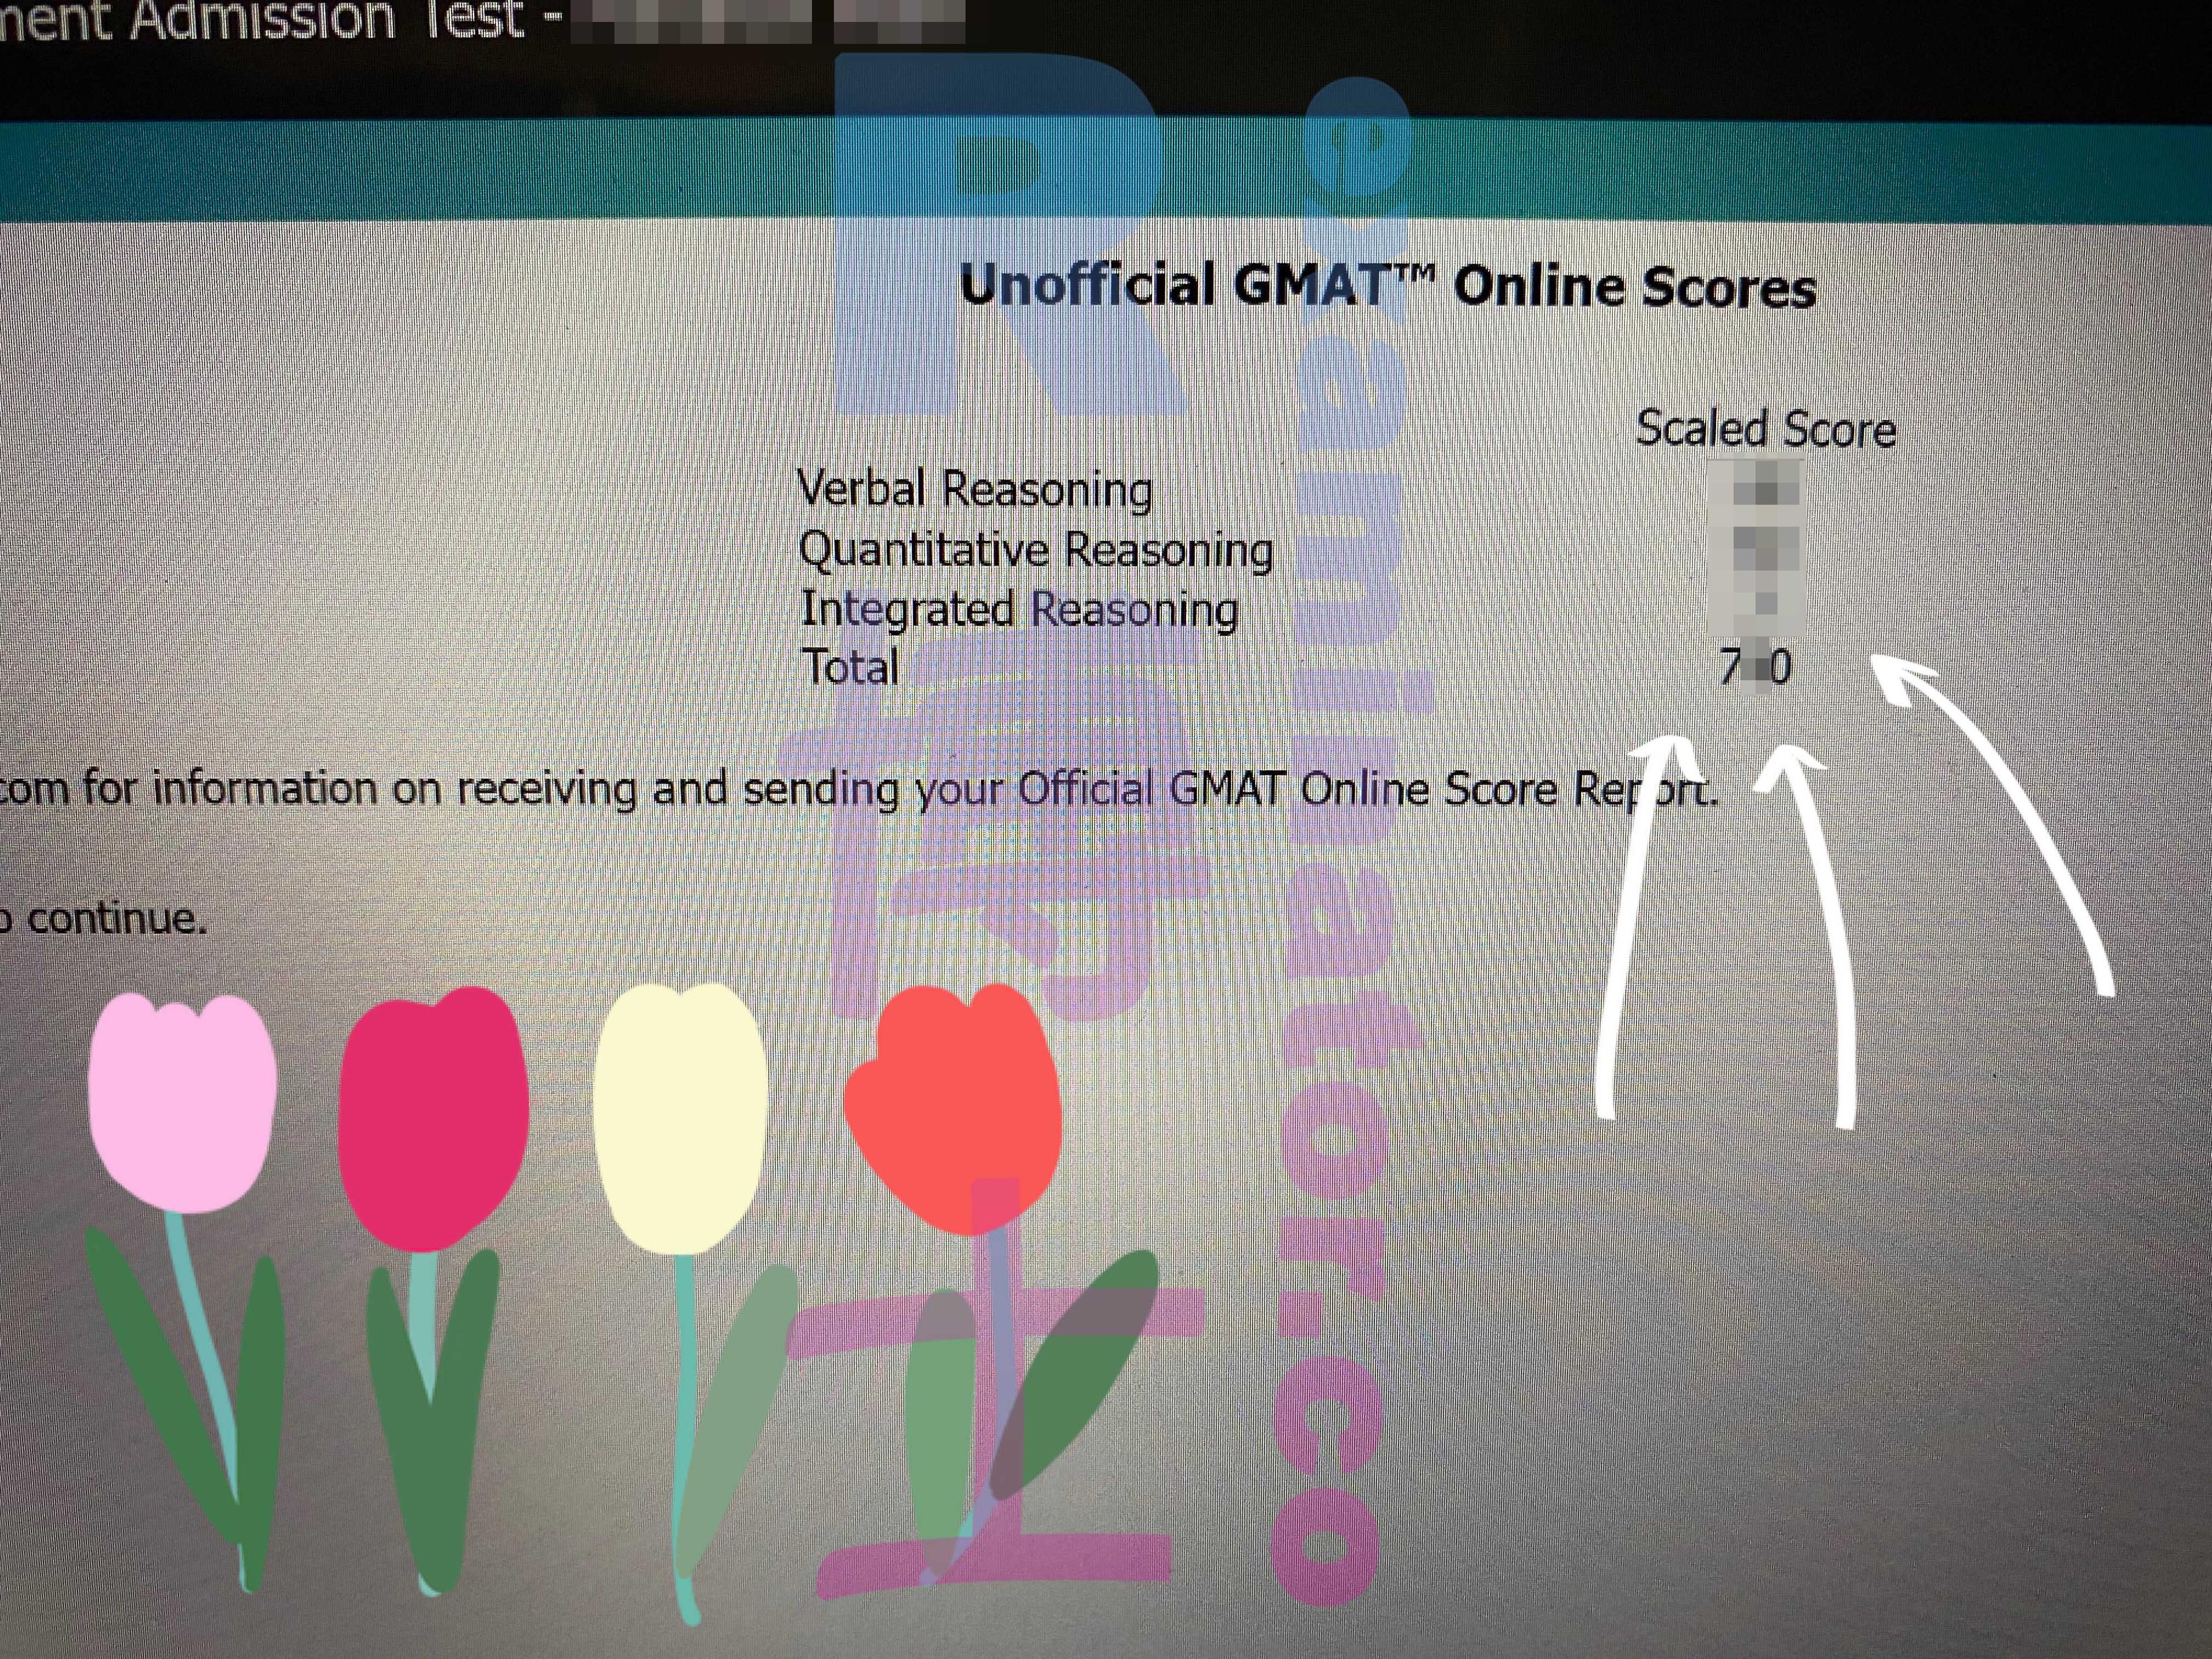 score image for GMAT Proxy Testing success story #402